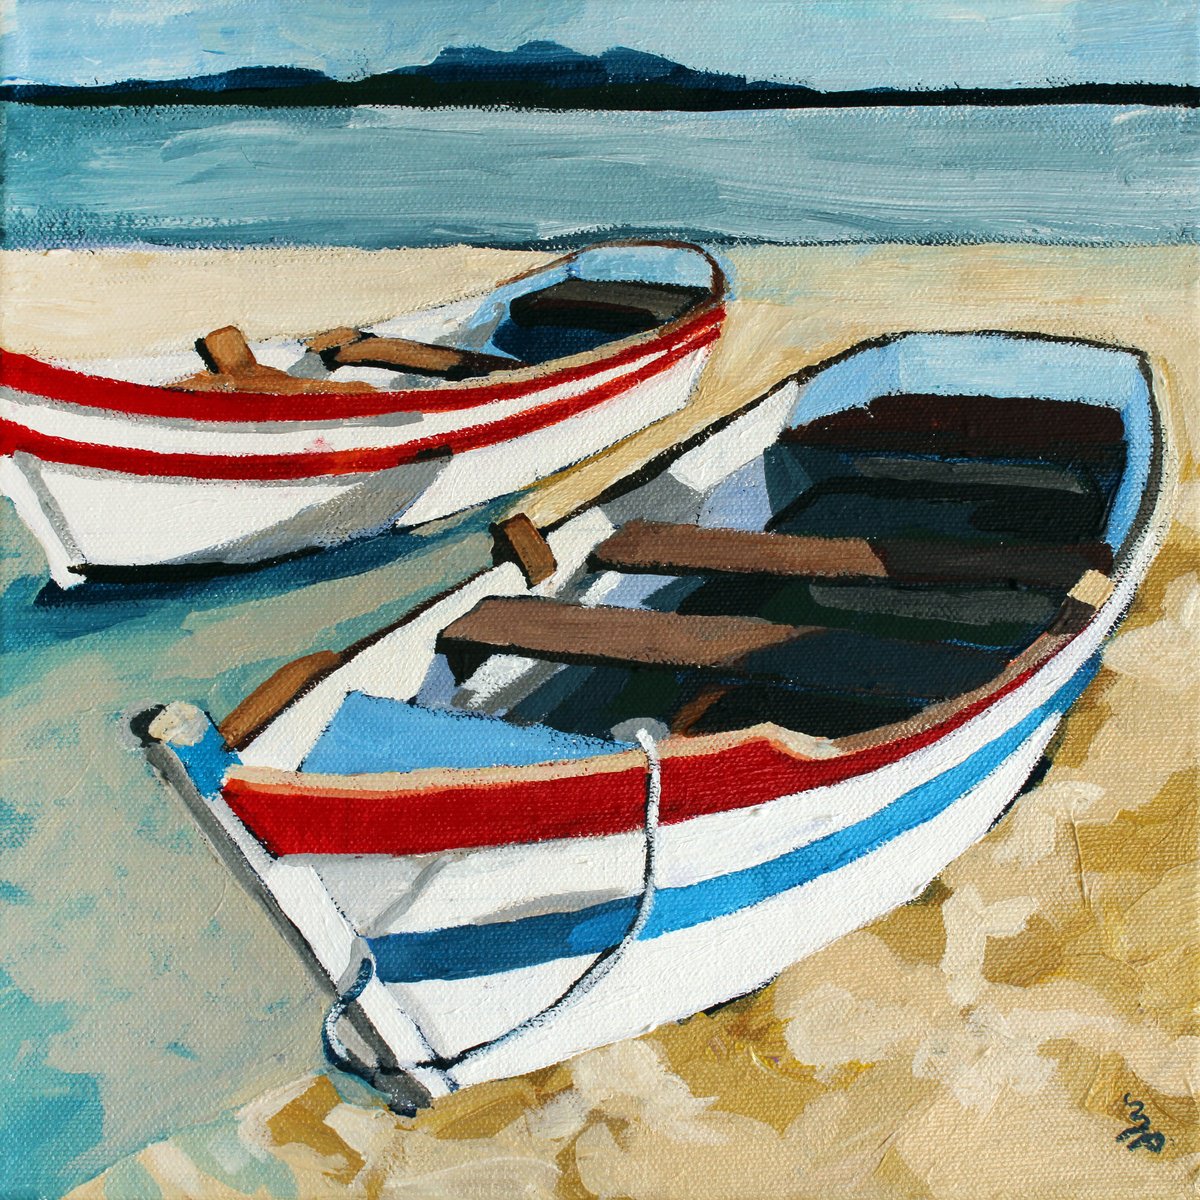 Beached Boats by Melinda Patrick